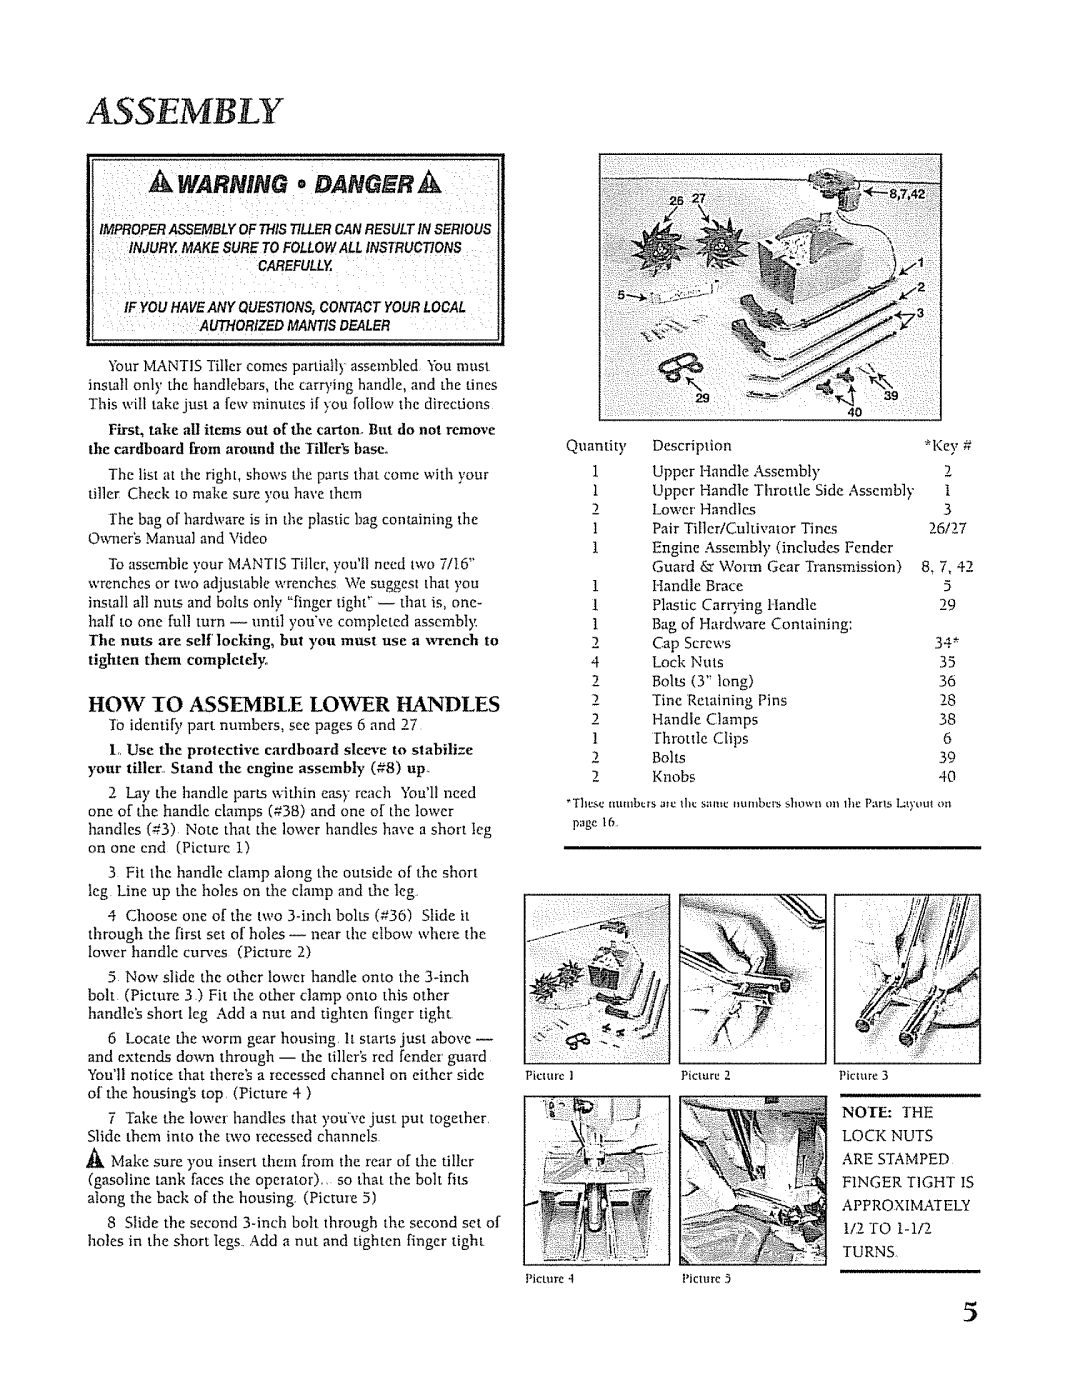 Mantis SV-5C/2 manual Assembly, Warning Oang R, Assemble, Lower, Handles 